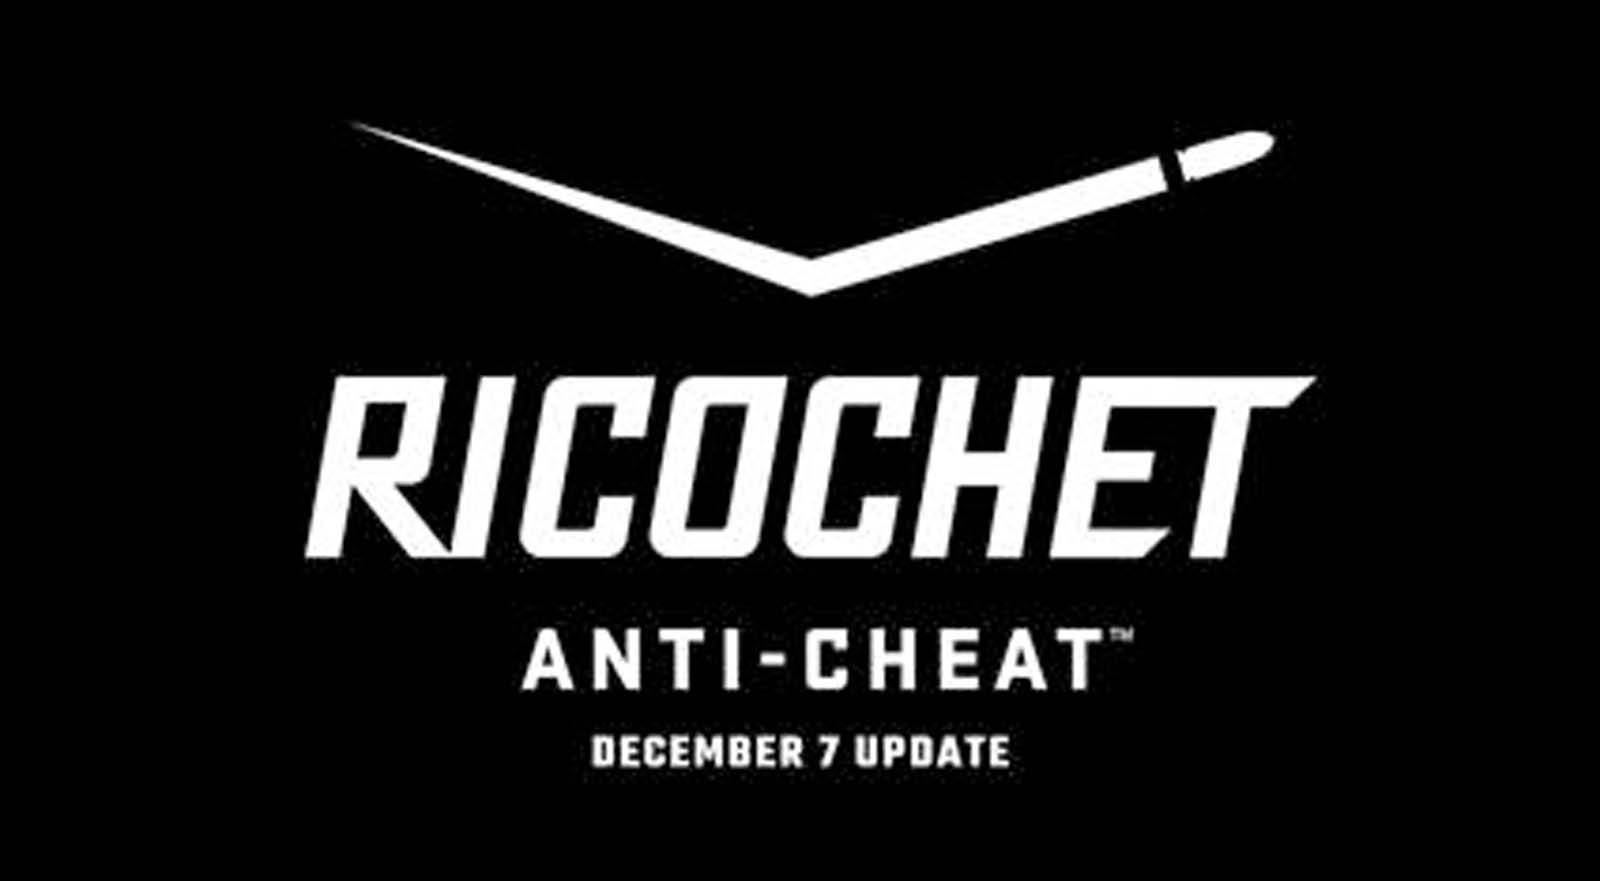 RICOCHET Anti-Cheat